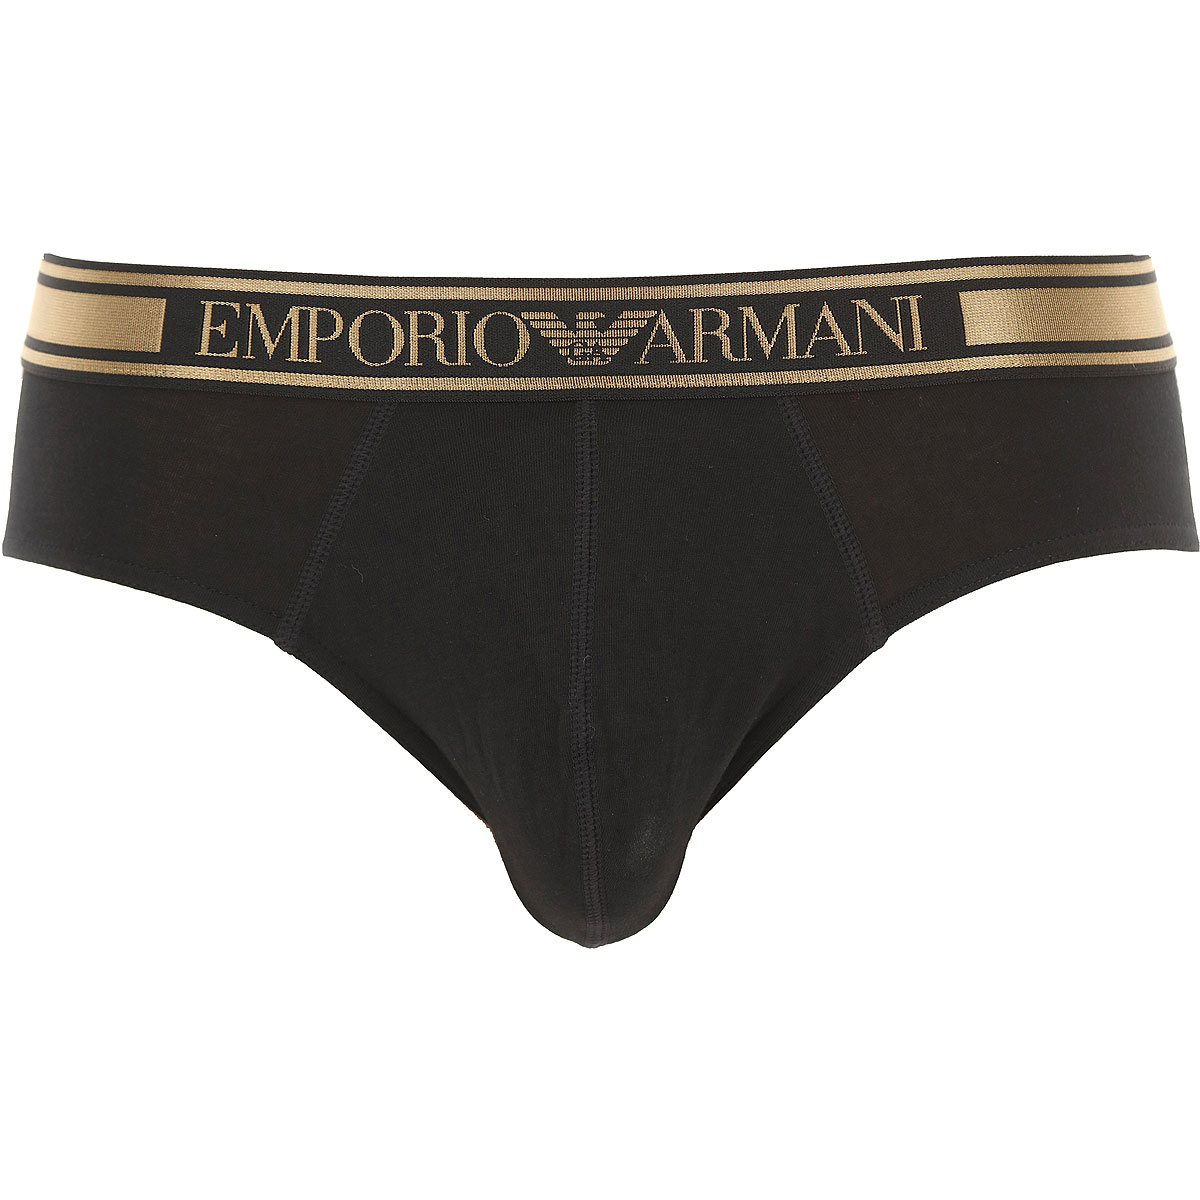 Mens Underwear Emporio Armani, Style code: 110814-0a512-00020